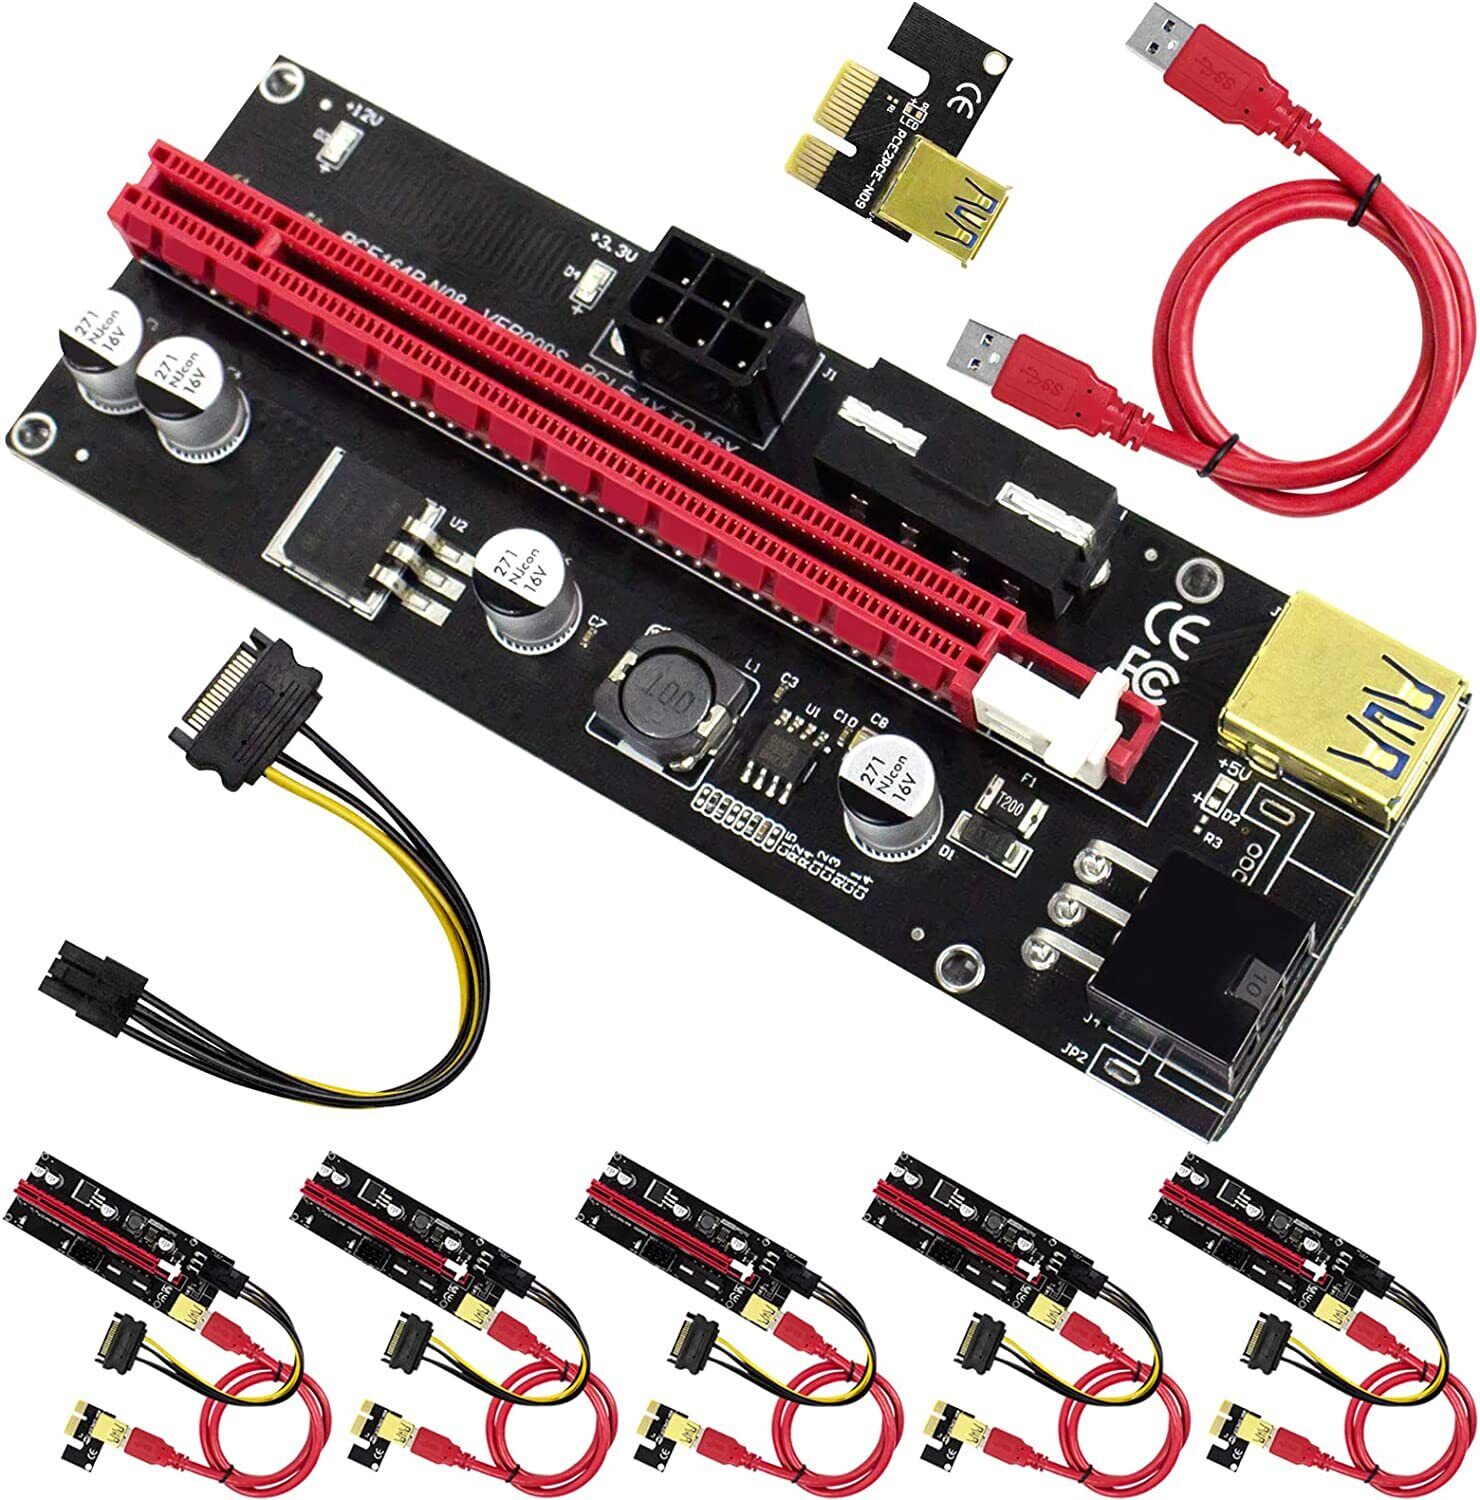 6PCS VER009S PCI-E Riser Card PCIe 1x to 16x USB3.0 Data Cable Bitcoin Mining US